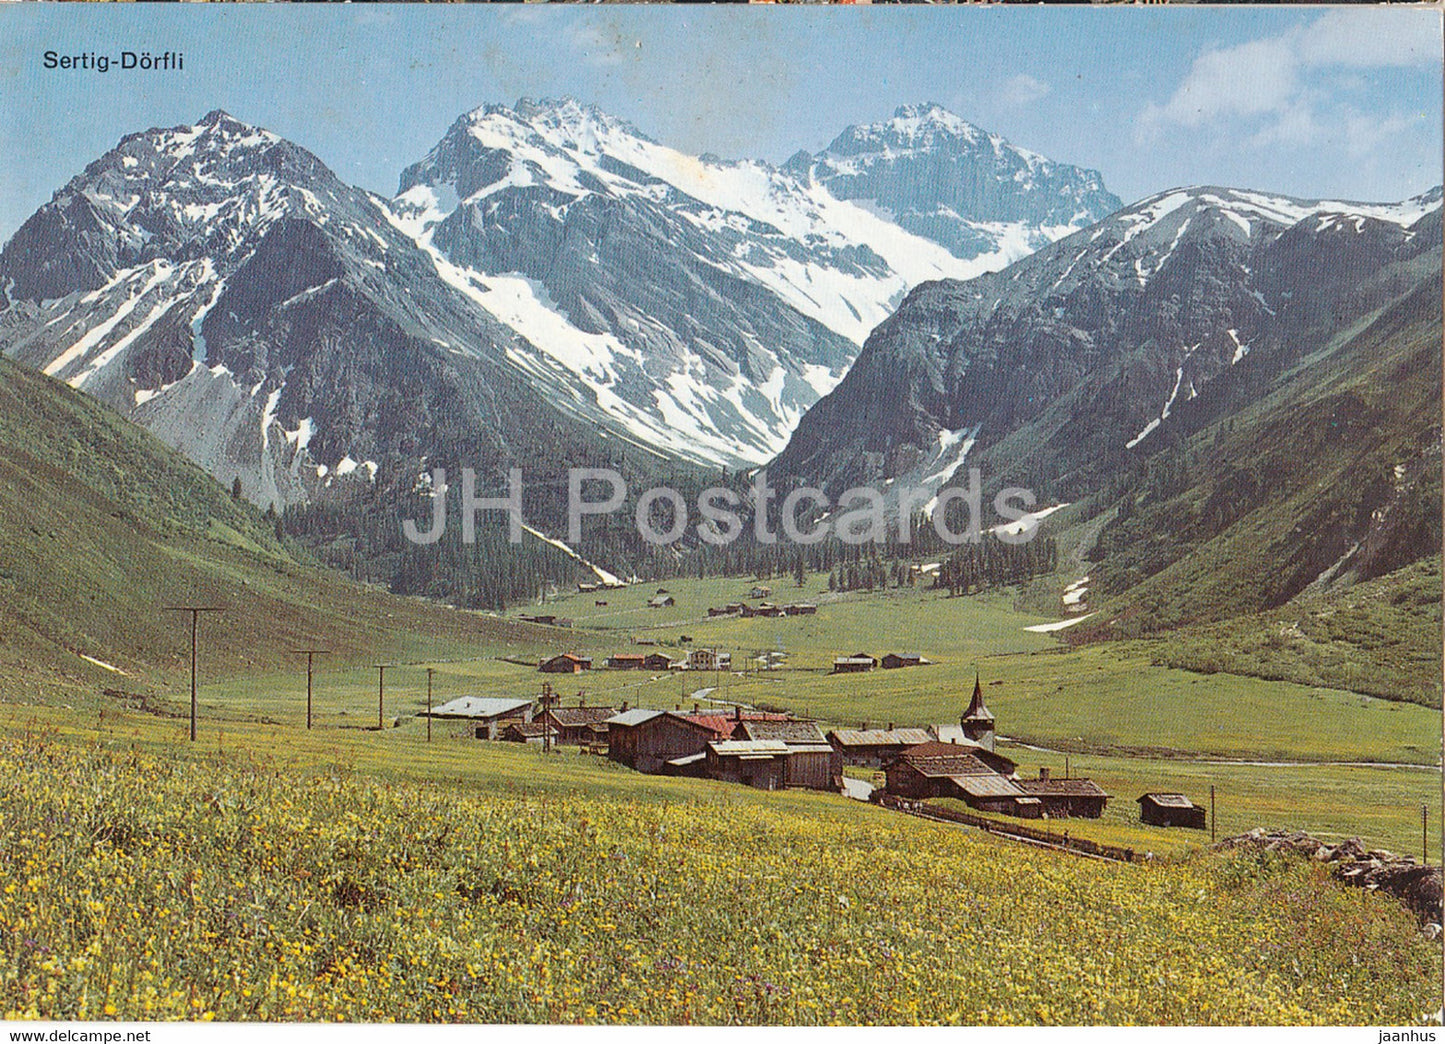 Sertig Dorfli bei Davos mit Ducan - 1979 - Switzerland - used - JH Postcards